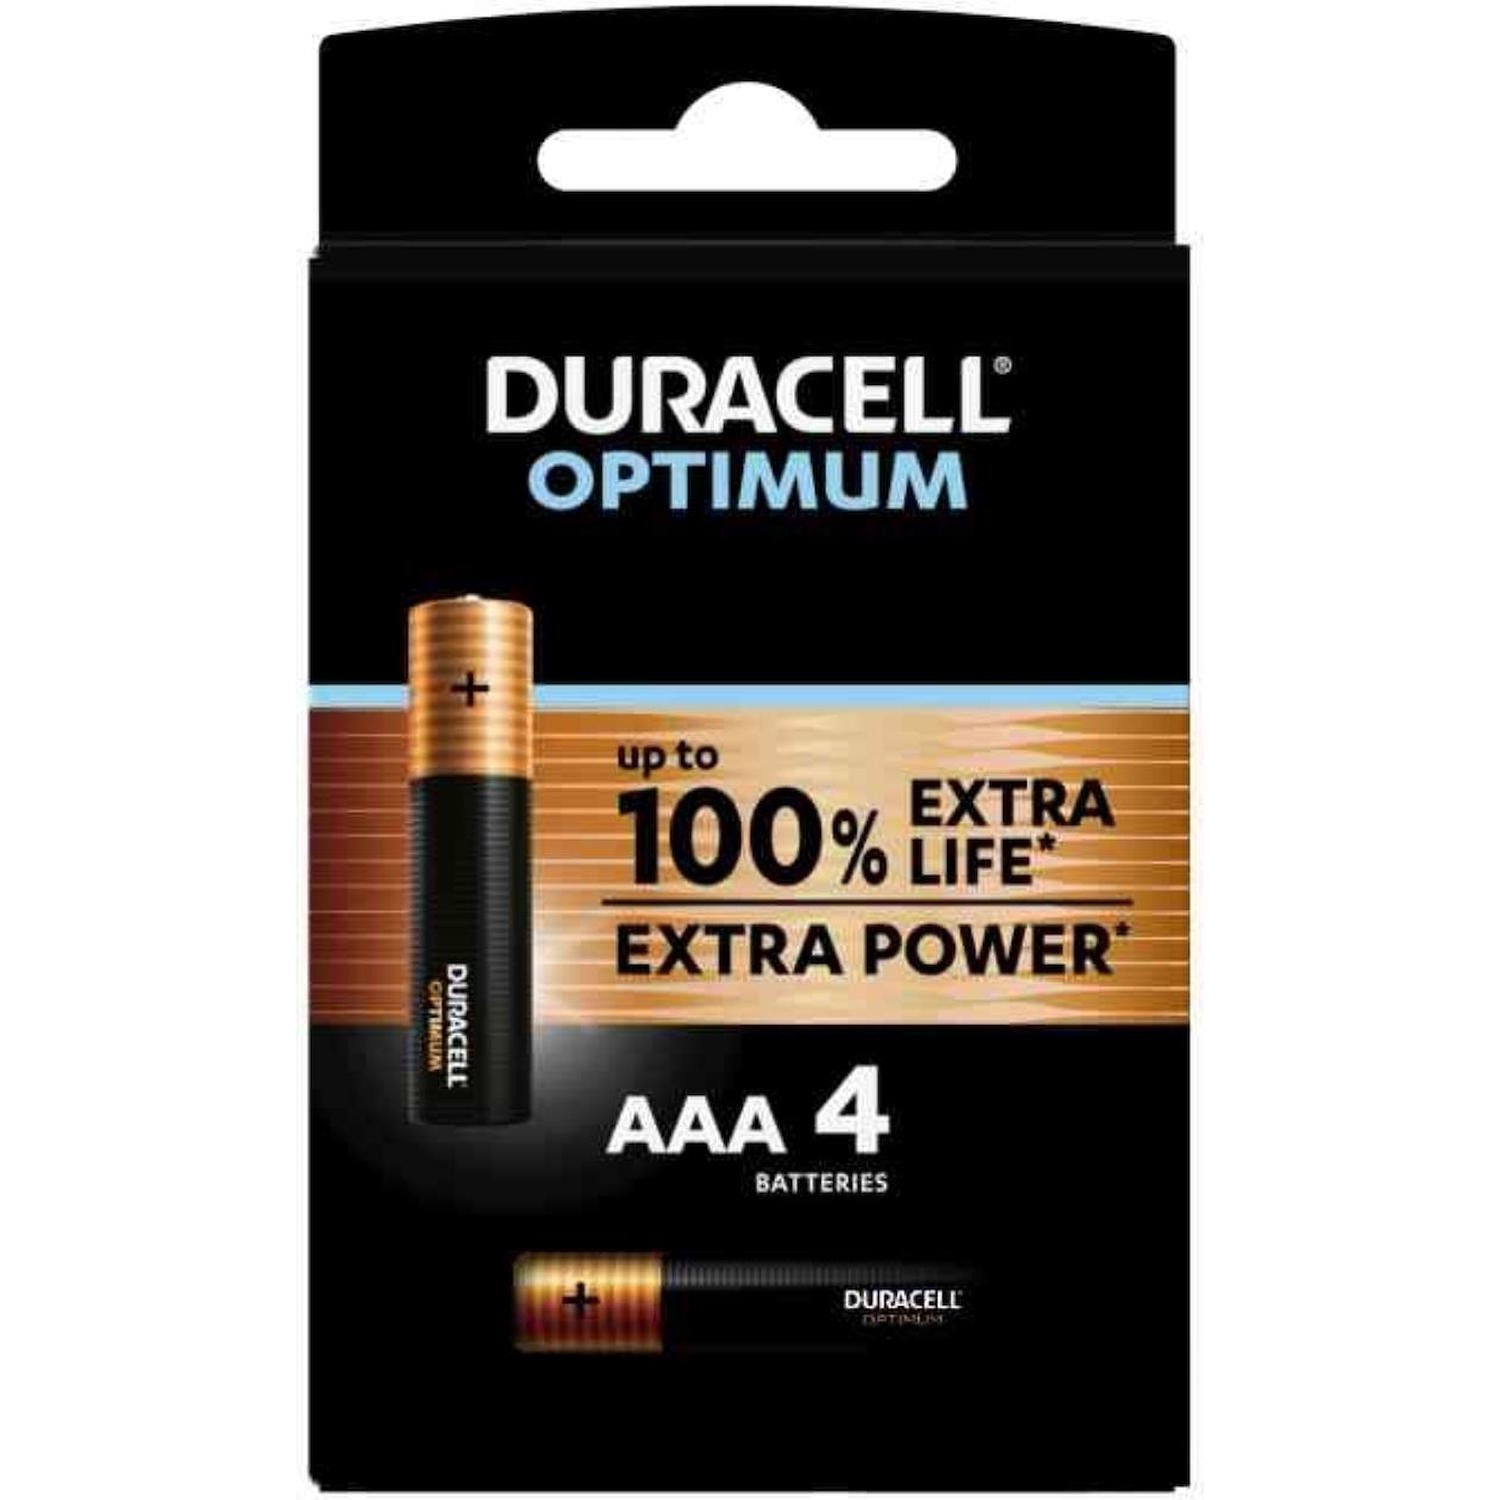 Immagine per Batteria pila mini stilo alcalina Duracell OptimumAAA 2400 blister 4pz. da DIMOStore